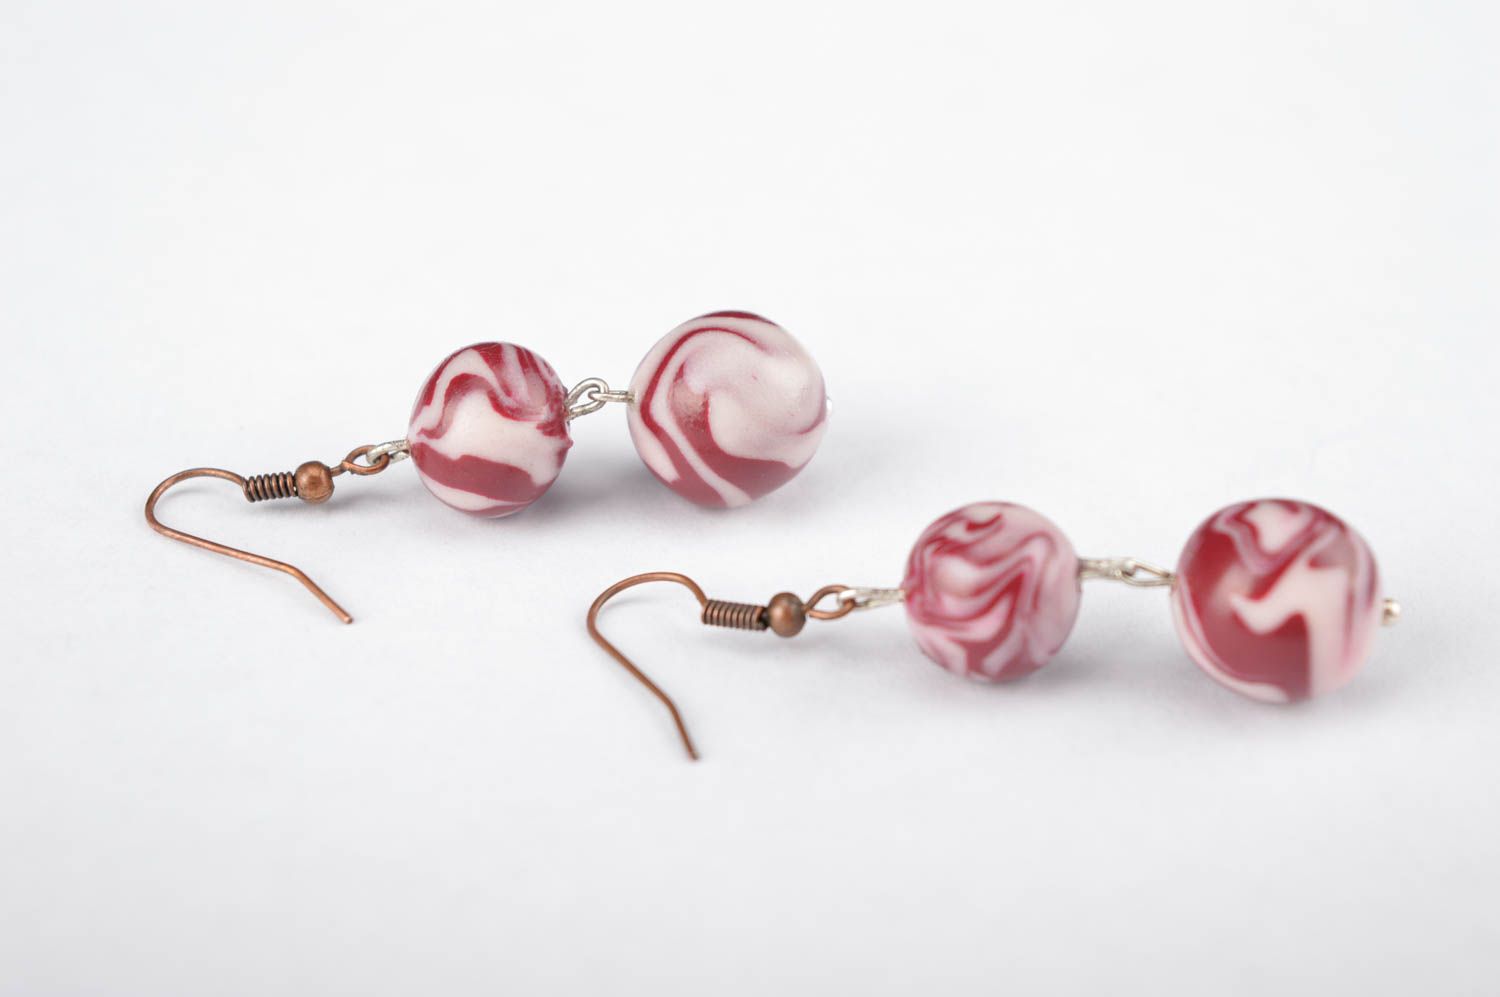 Special handmade paper filigree earrings – Kolours